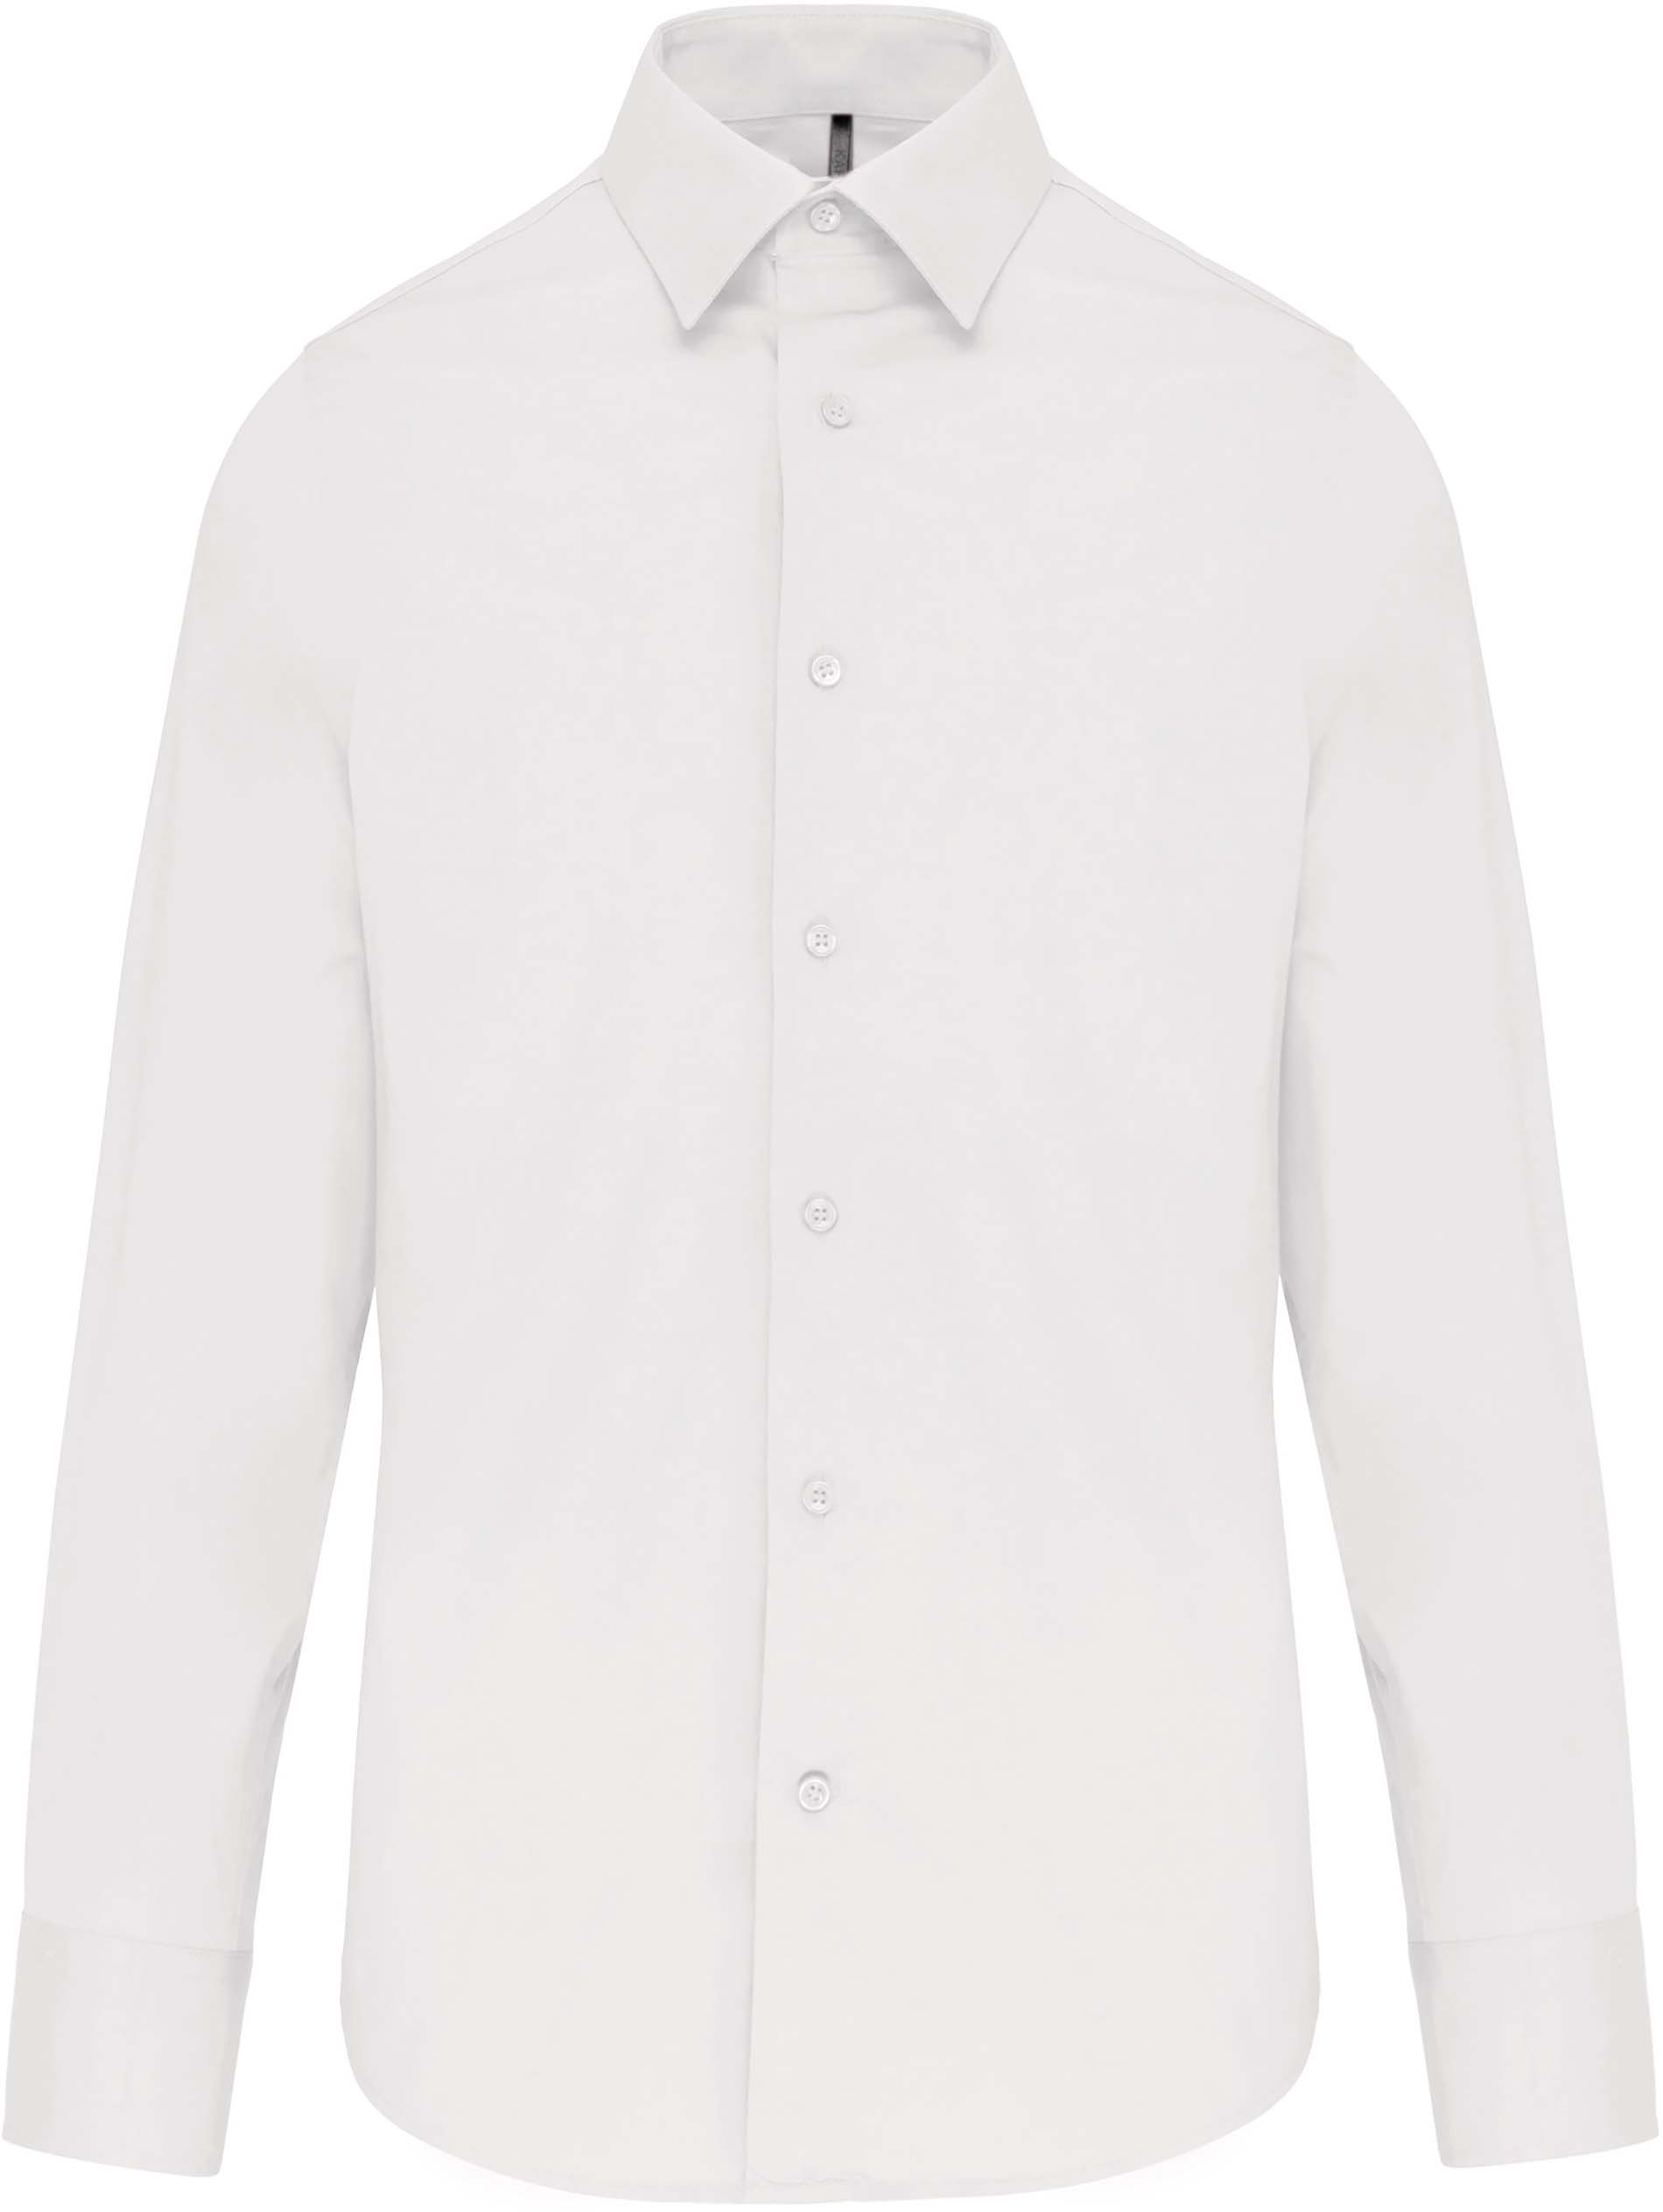 Pánská strečová košile s dlouhým rukávem Velikost: M, Barva: white, Rozměr: 78,30/54